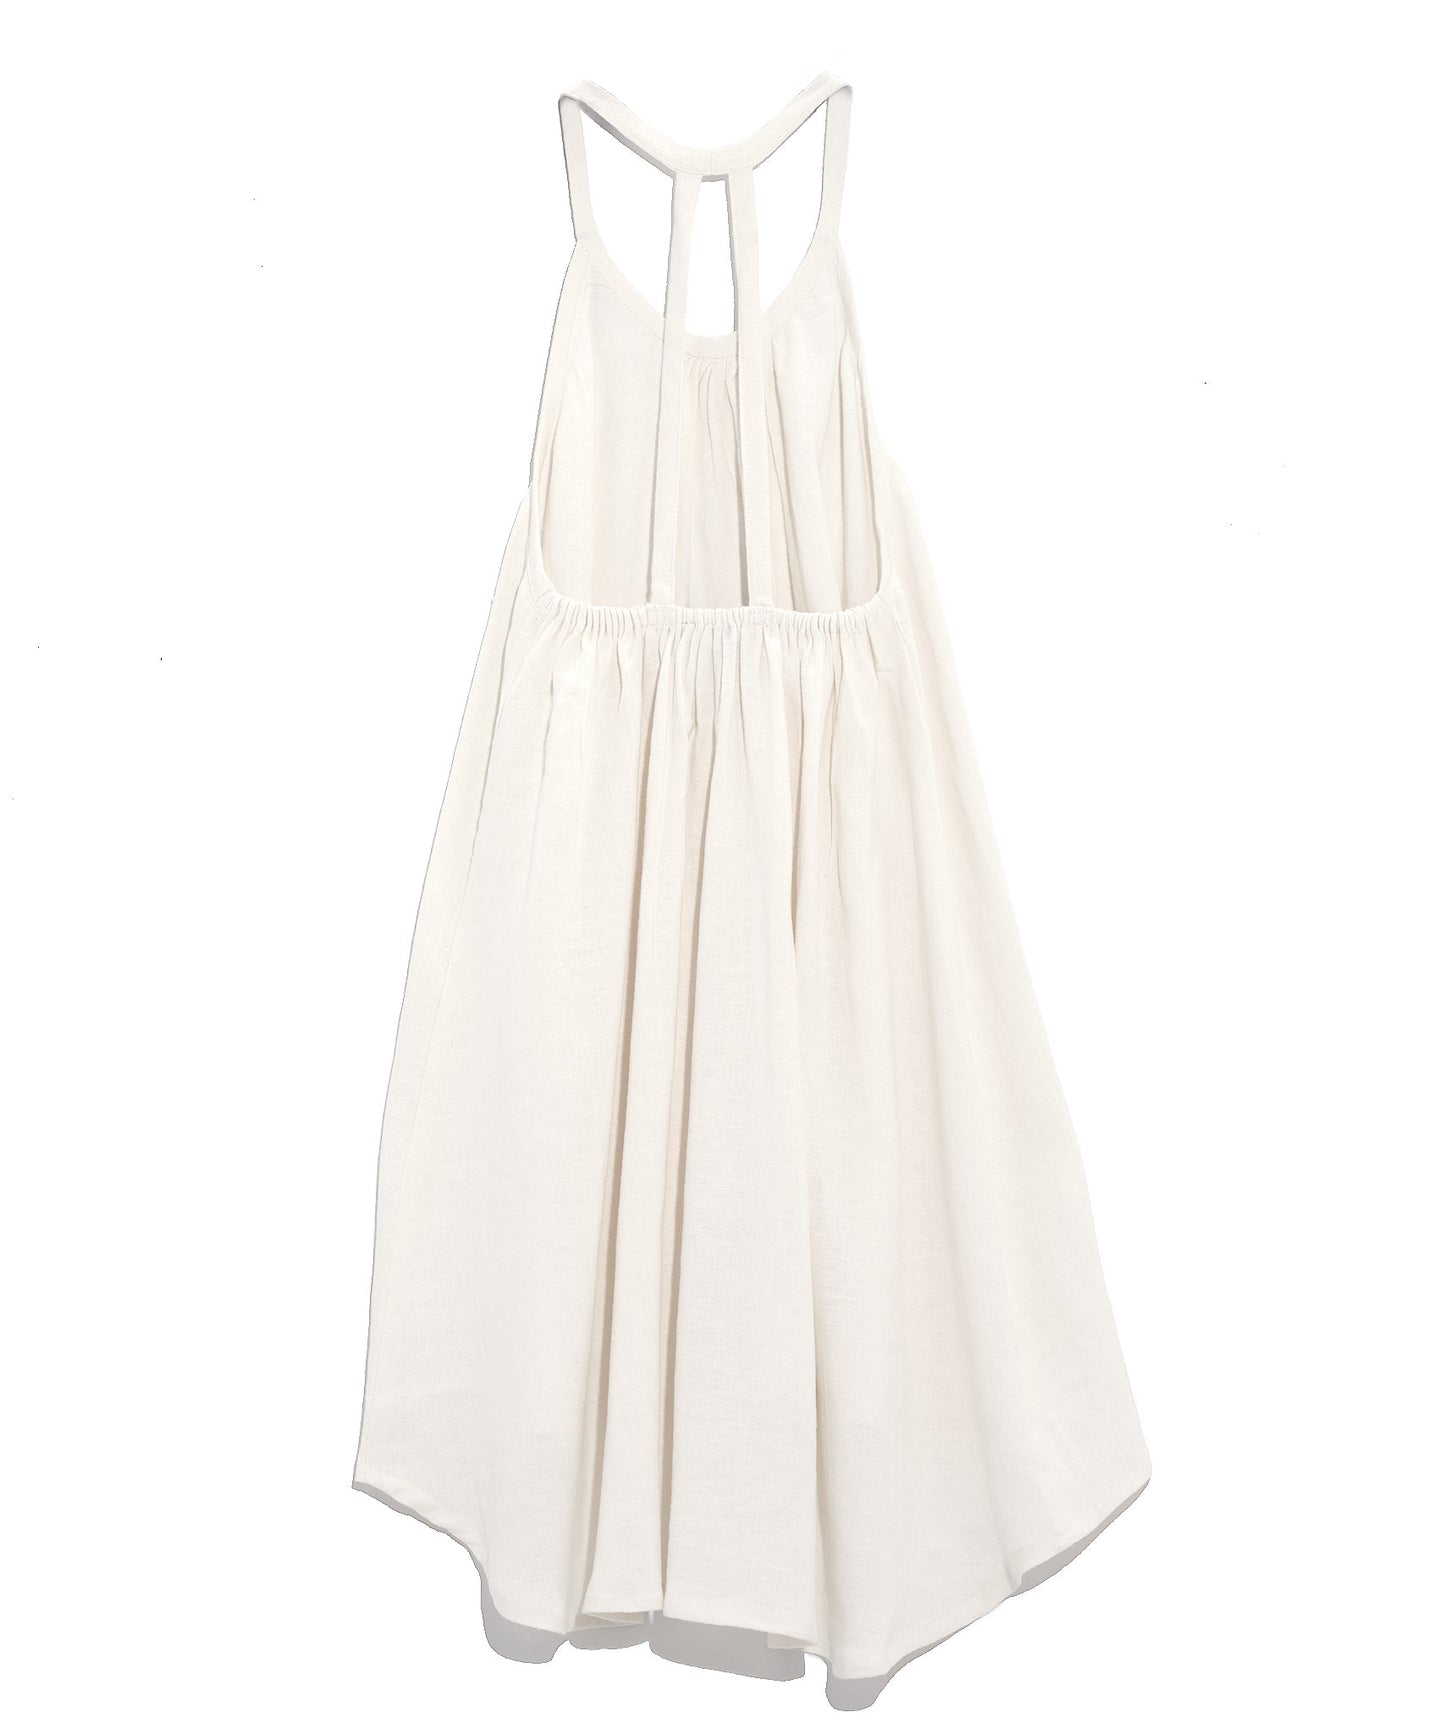 Meridian Slip Dress in color Ivory